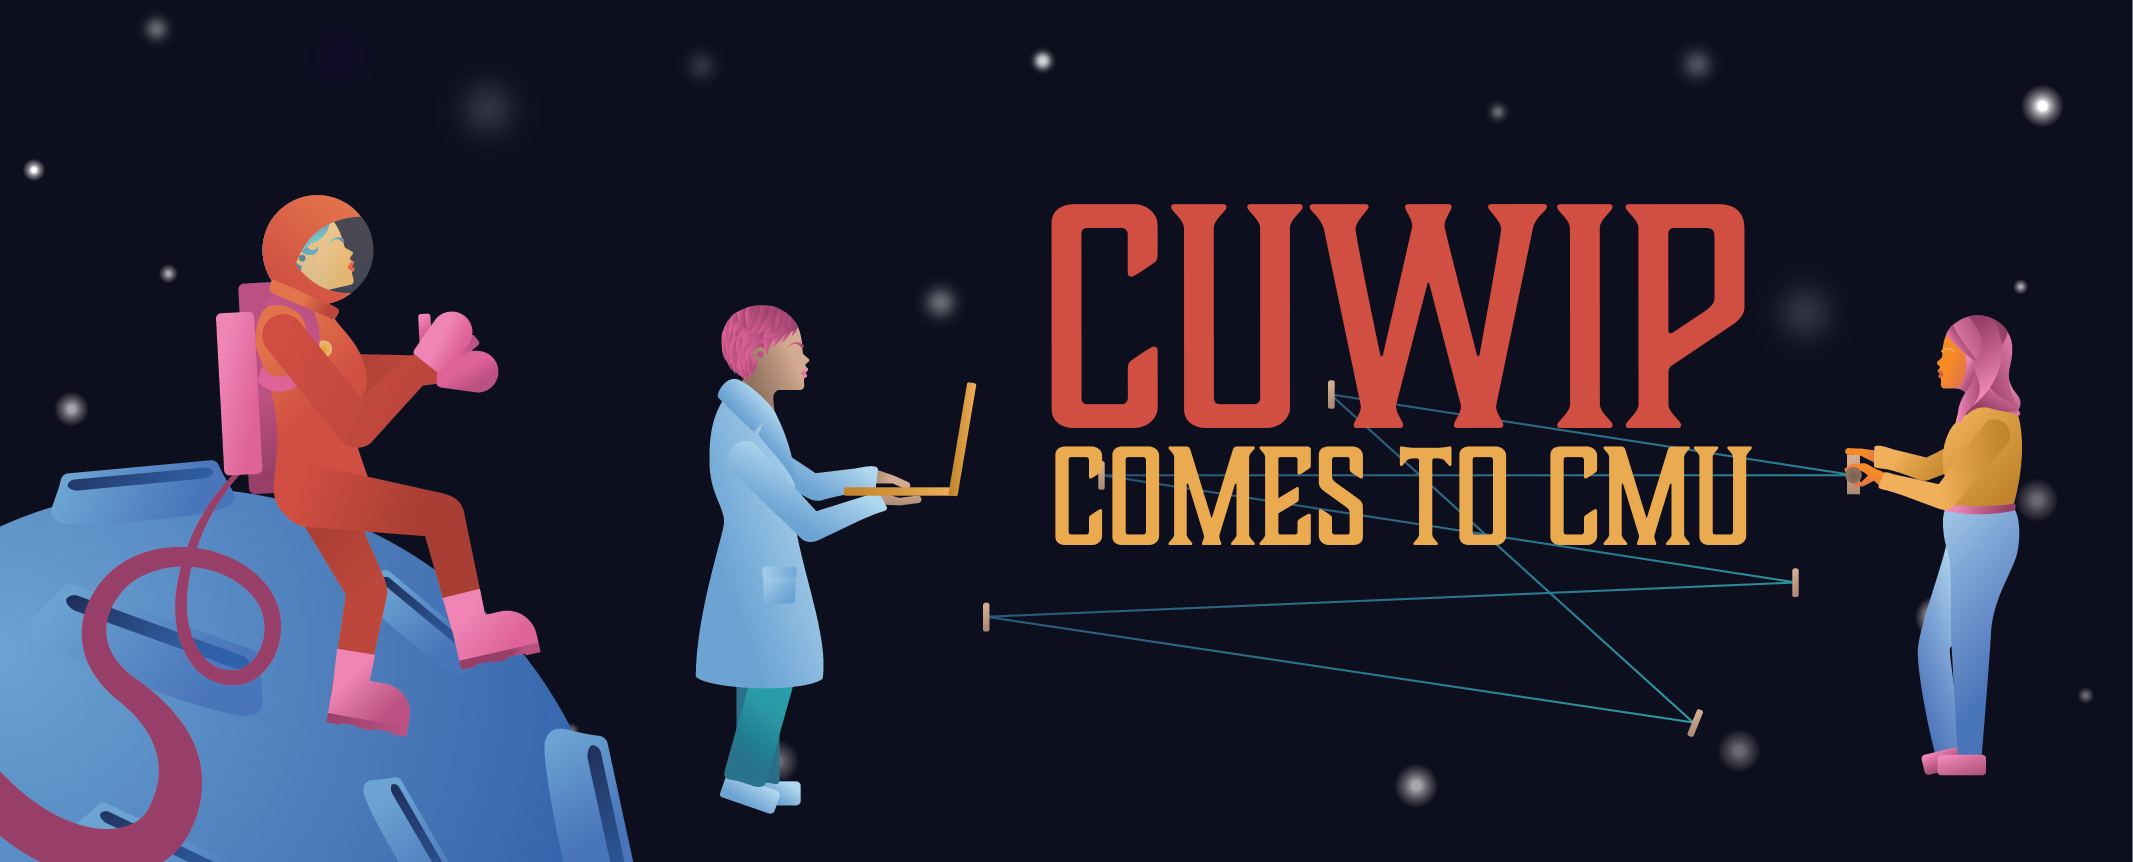 CUWiP Comes to CMU